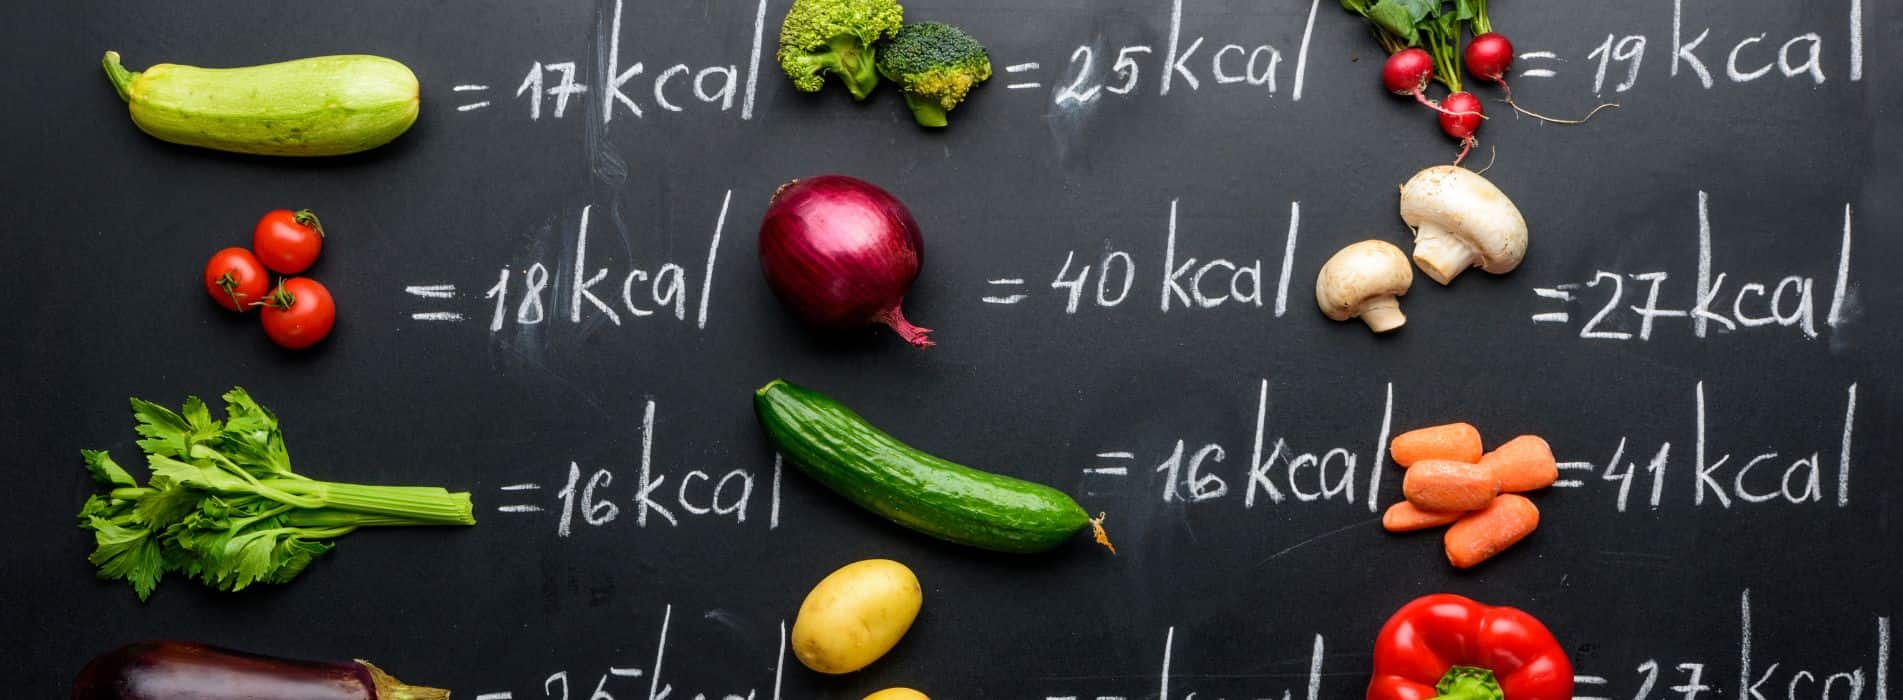 Daily calories intake of veggies